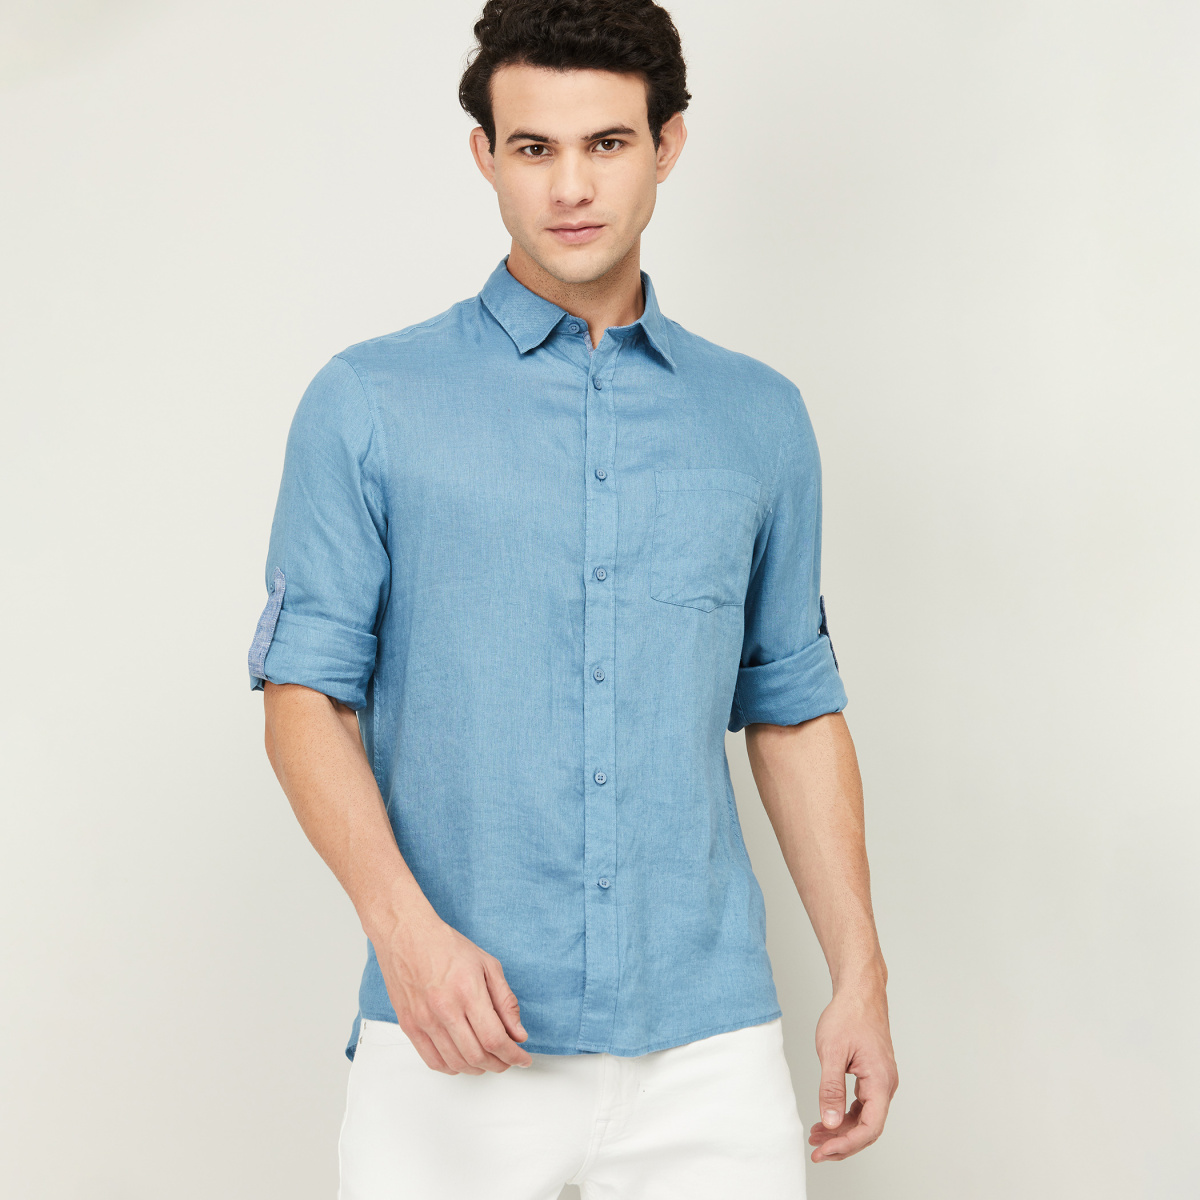 Celio Relax Collection Denim Collar Polo Long Sleeve Blue Shirt Size 2XL  XXL | eBay